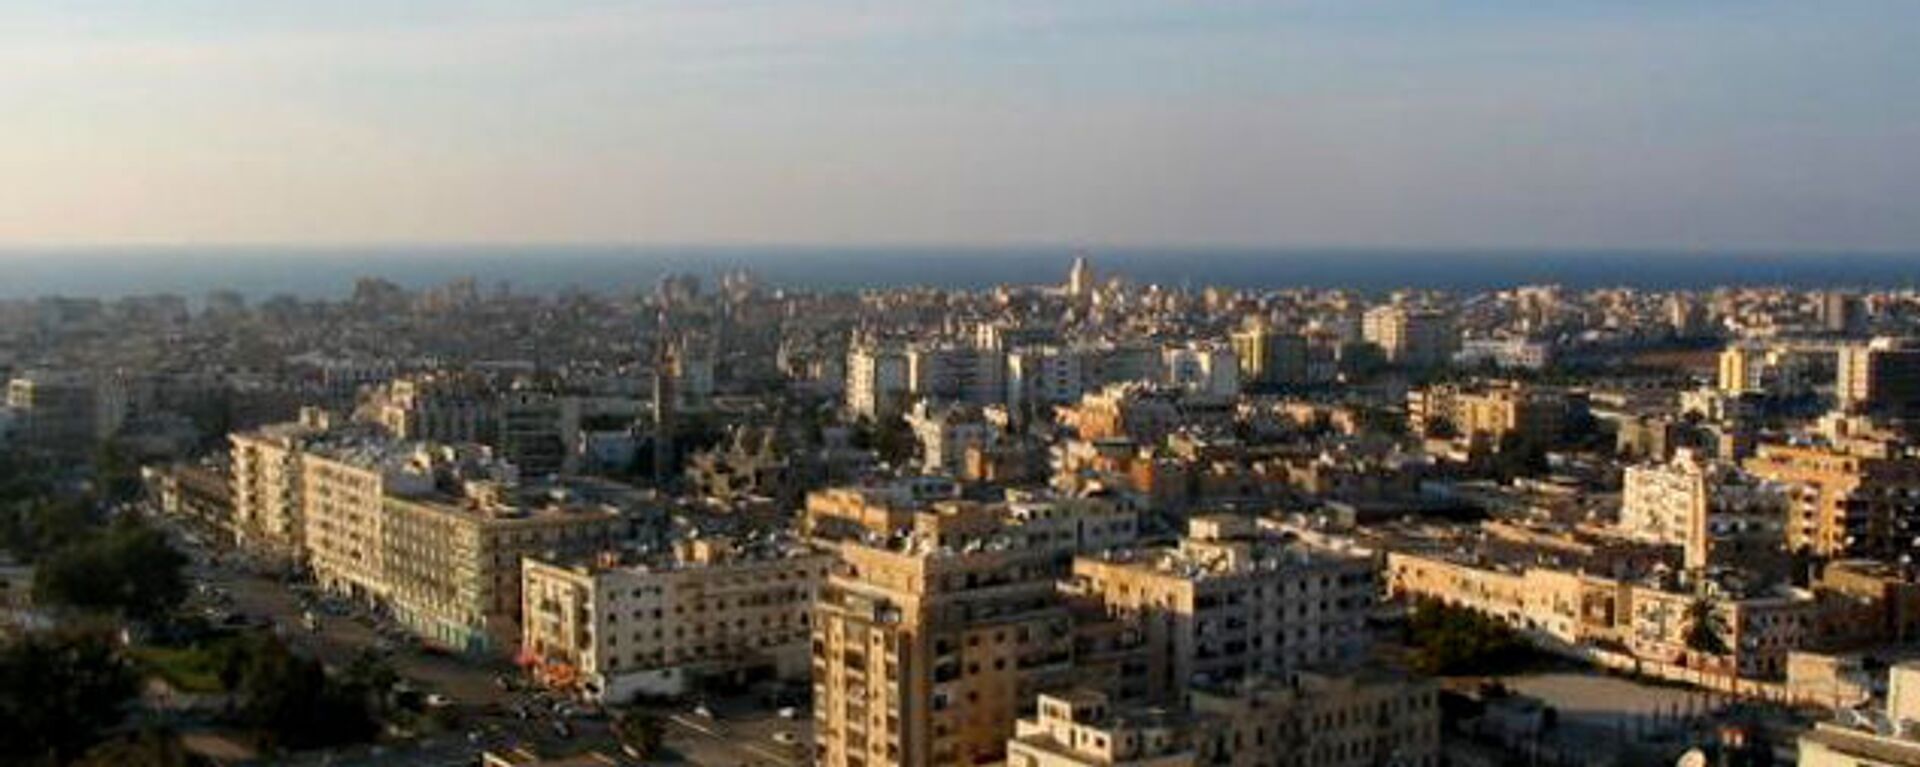 A view of the Old Town of Benghazi, Libya - Sputnik International, 1920, 22.11.2021